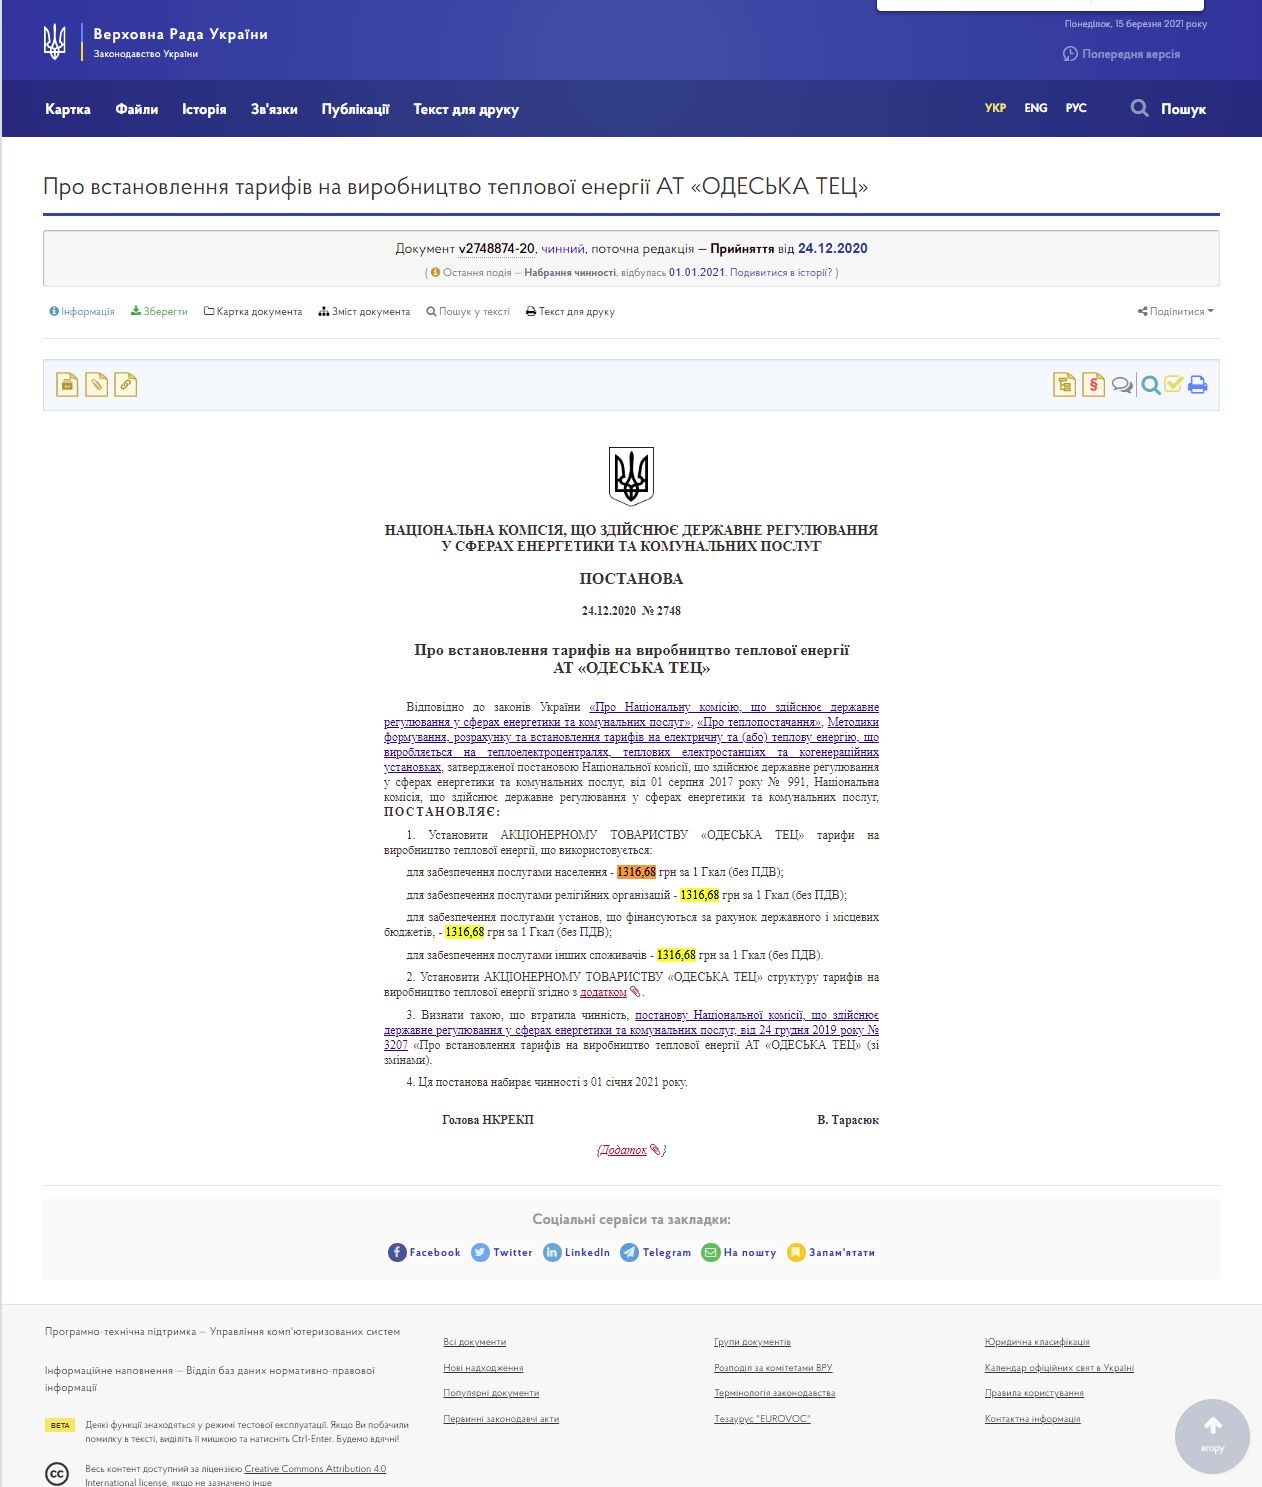 https://zakon.rada.gov.ua/rada/show/v2748874-20#Text